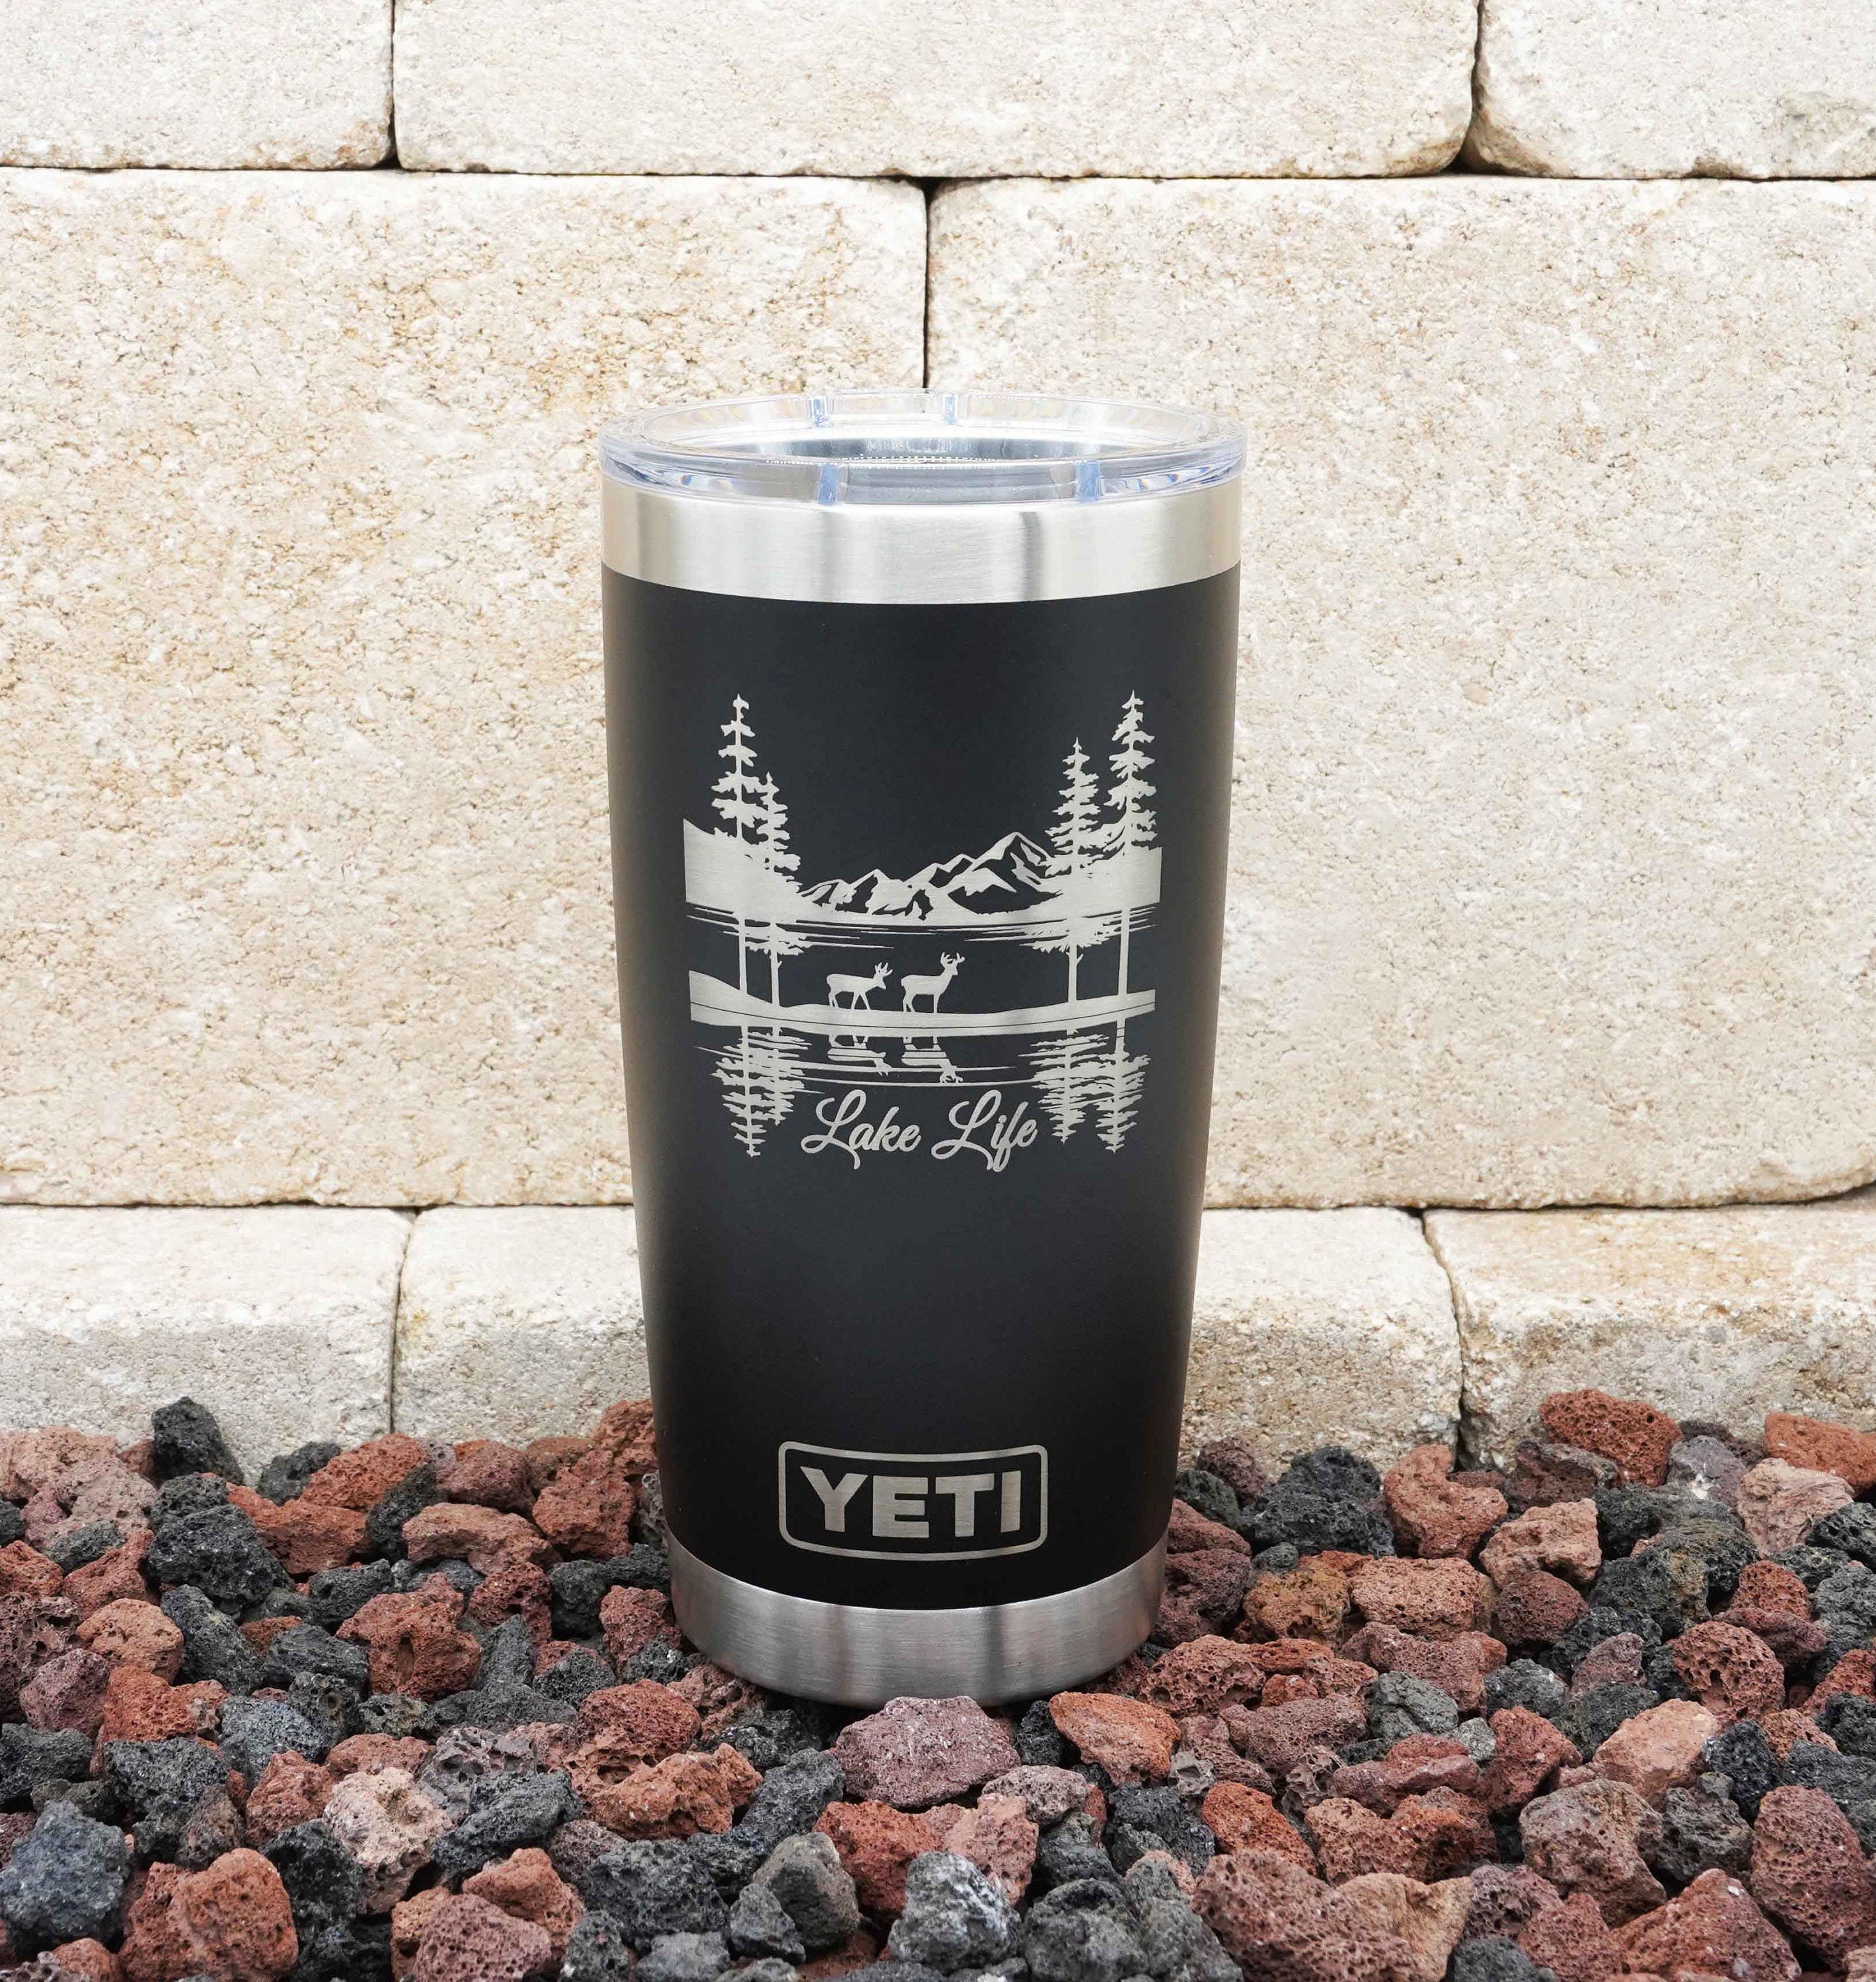 Laser Engraved YETI® or Polar Camel Tumbler Personalized with Name